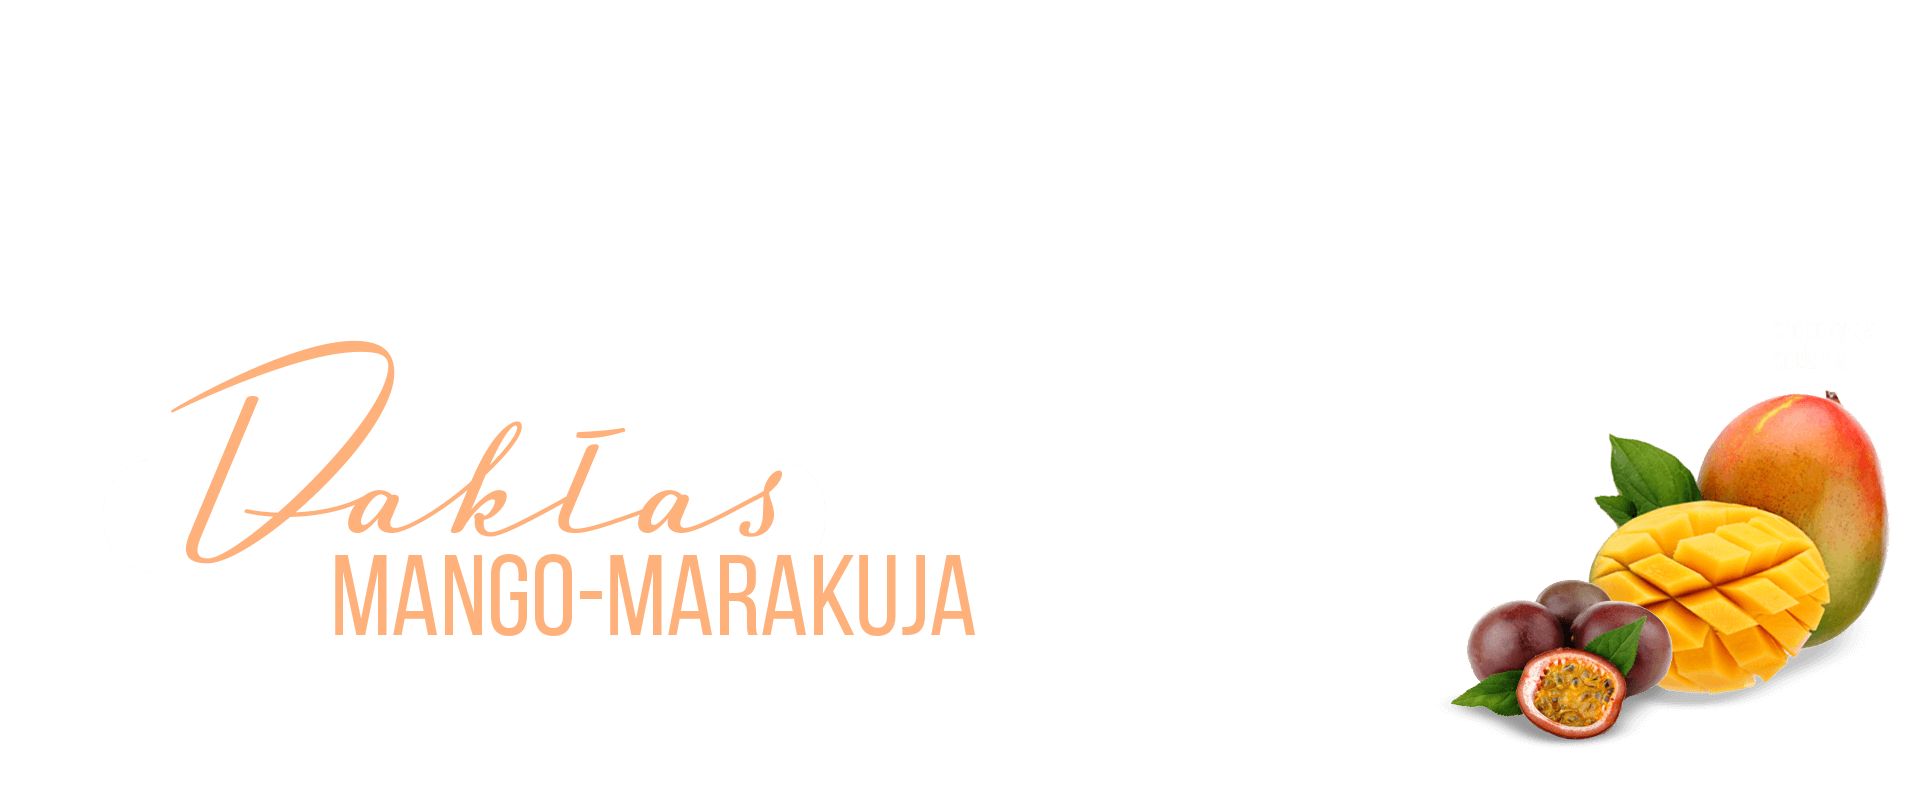 Dakłas mango-marakuja 2c